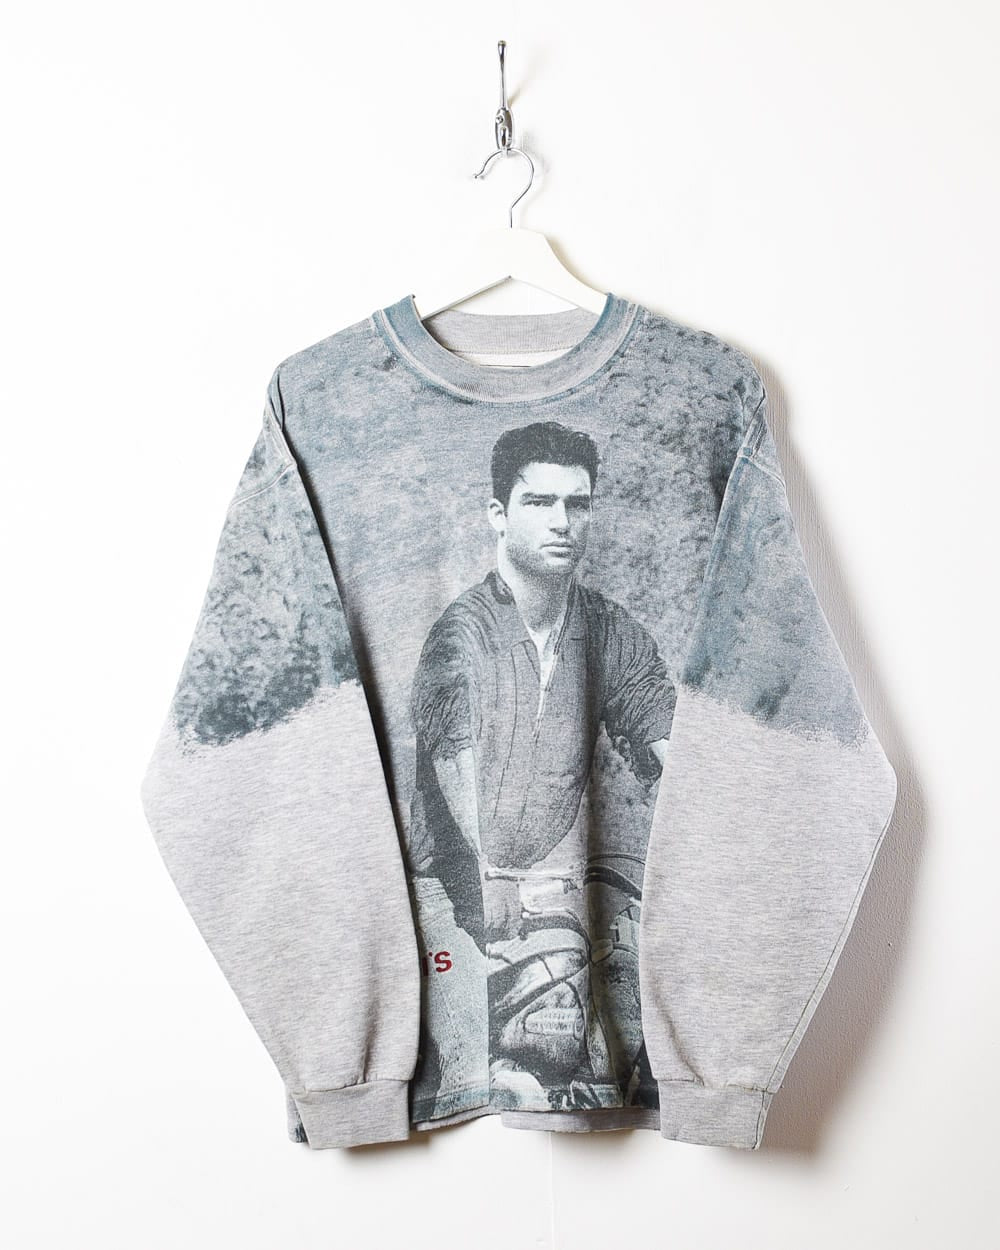 Grey Levi's Nick Kamen All-Over Print Sweatshirt - Large